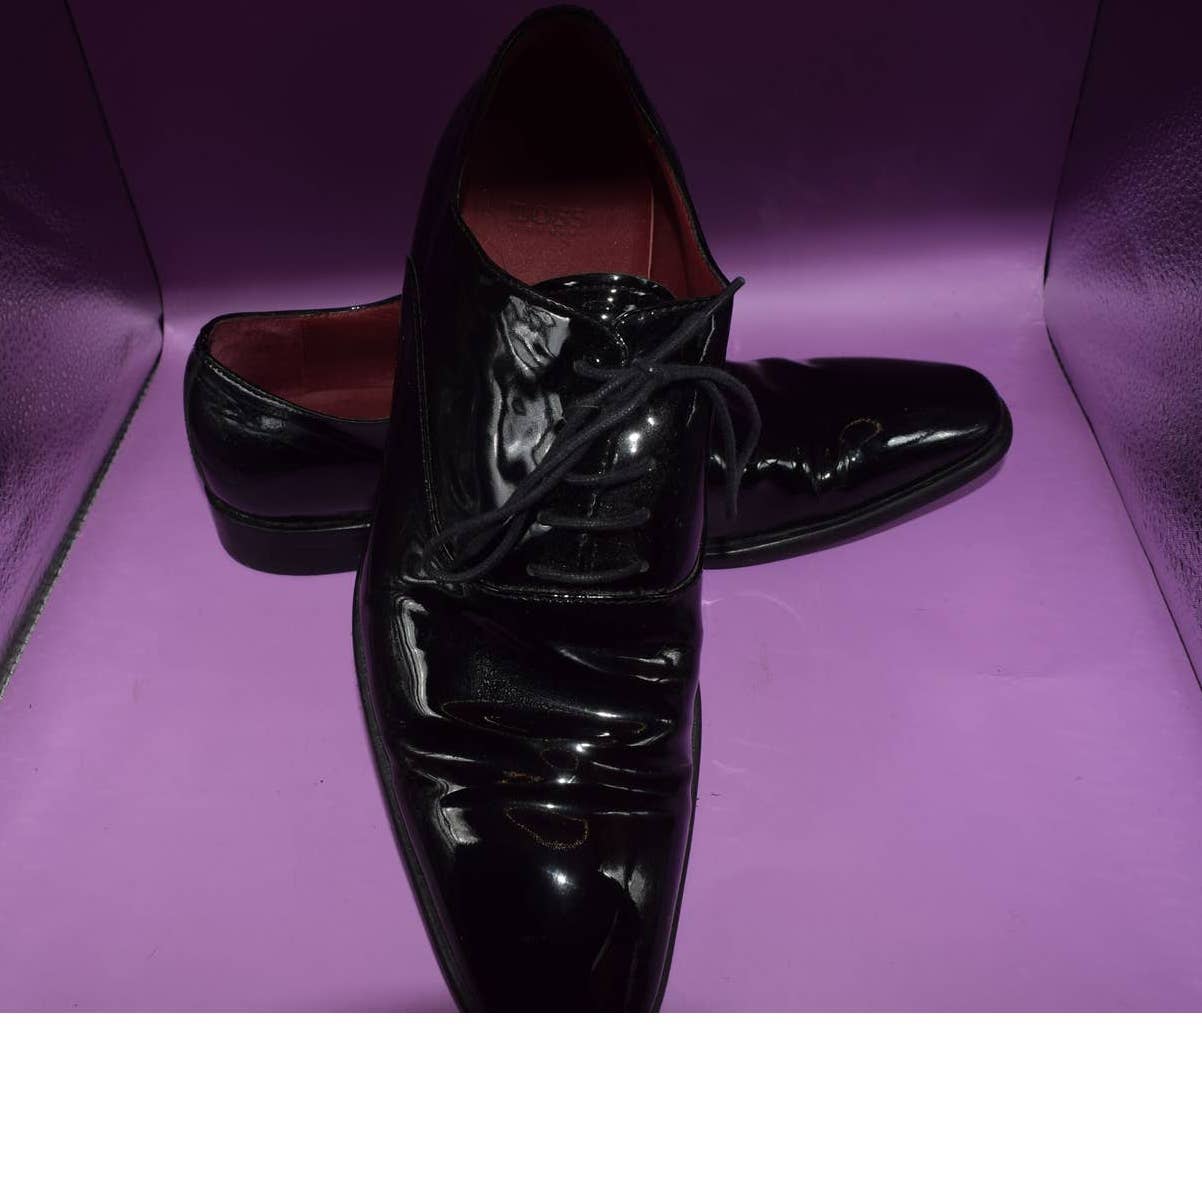 BOSS Hugo Boss Black Patent Leather Dress Oxford Shoes - 7